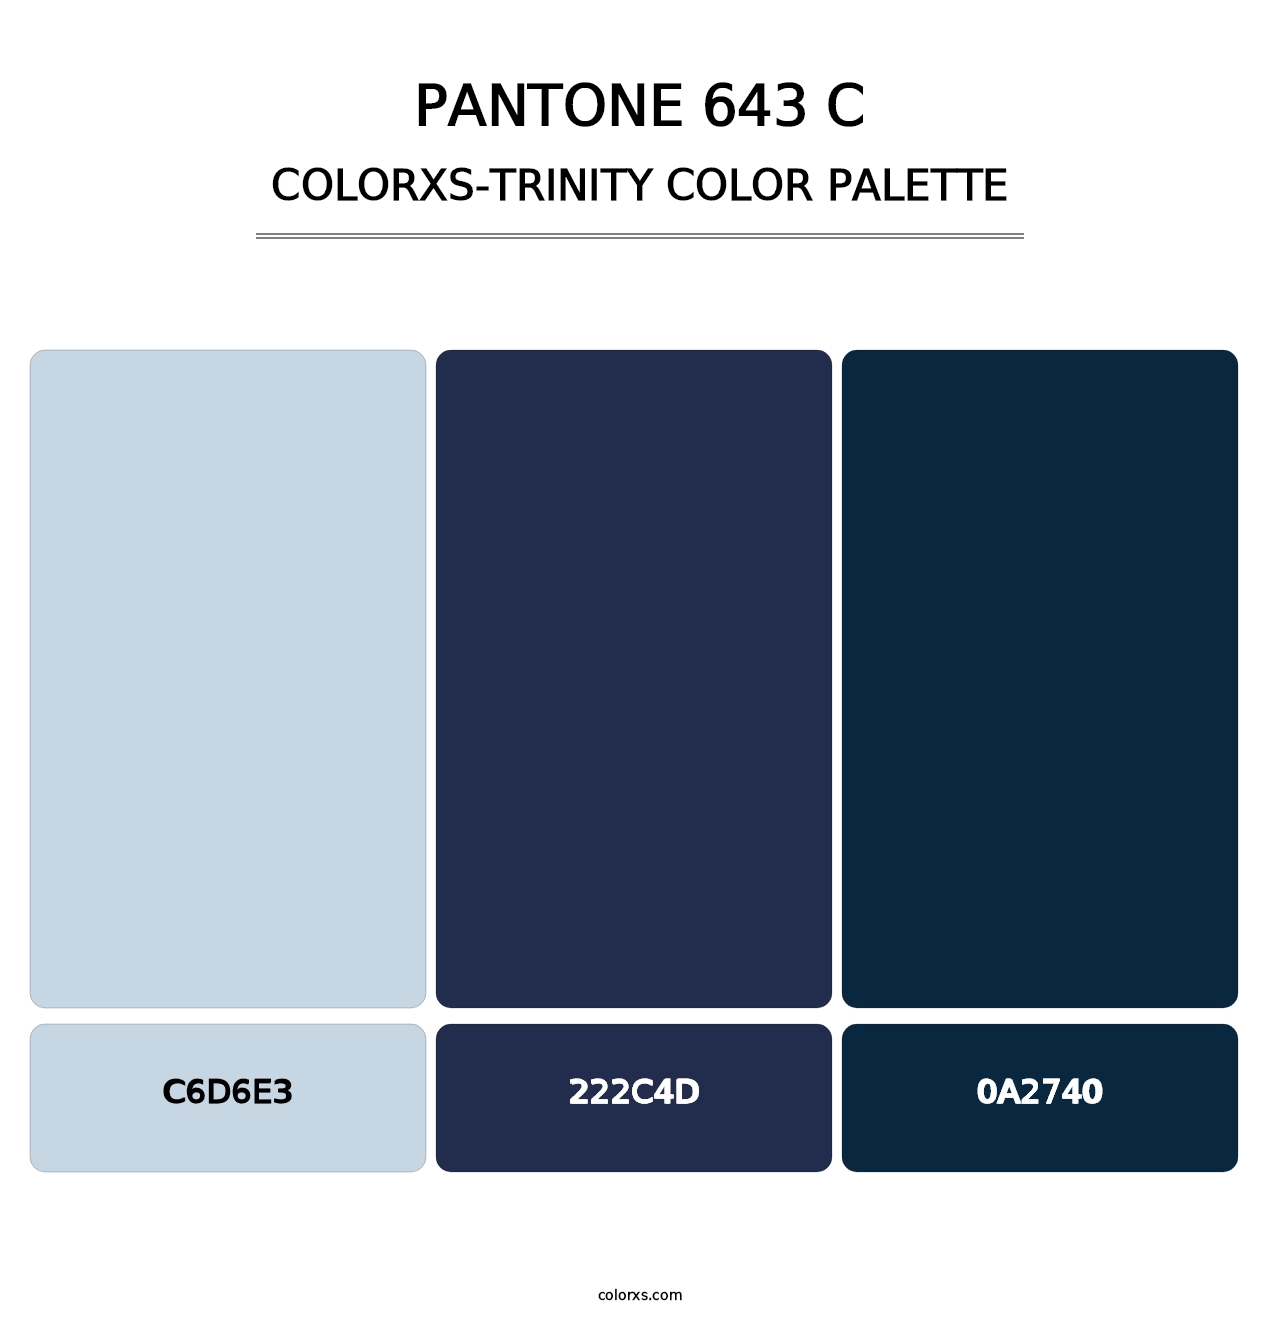 PANTONE 643 C - Colorxs Trinity Palette